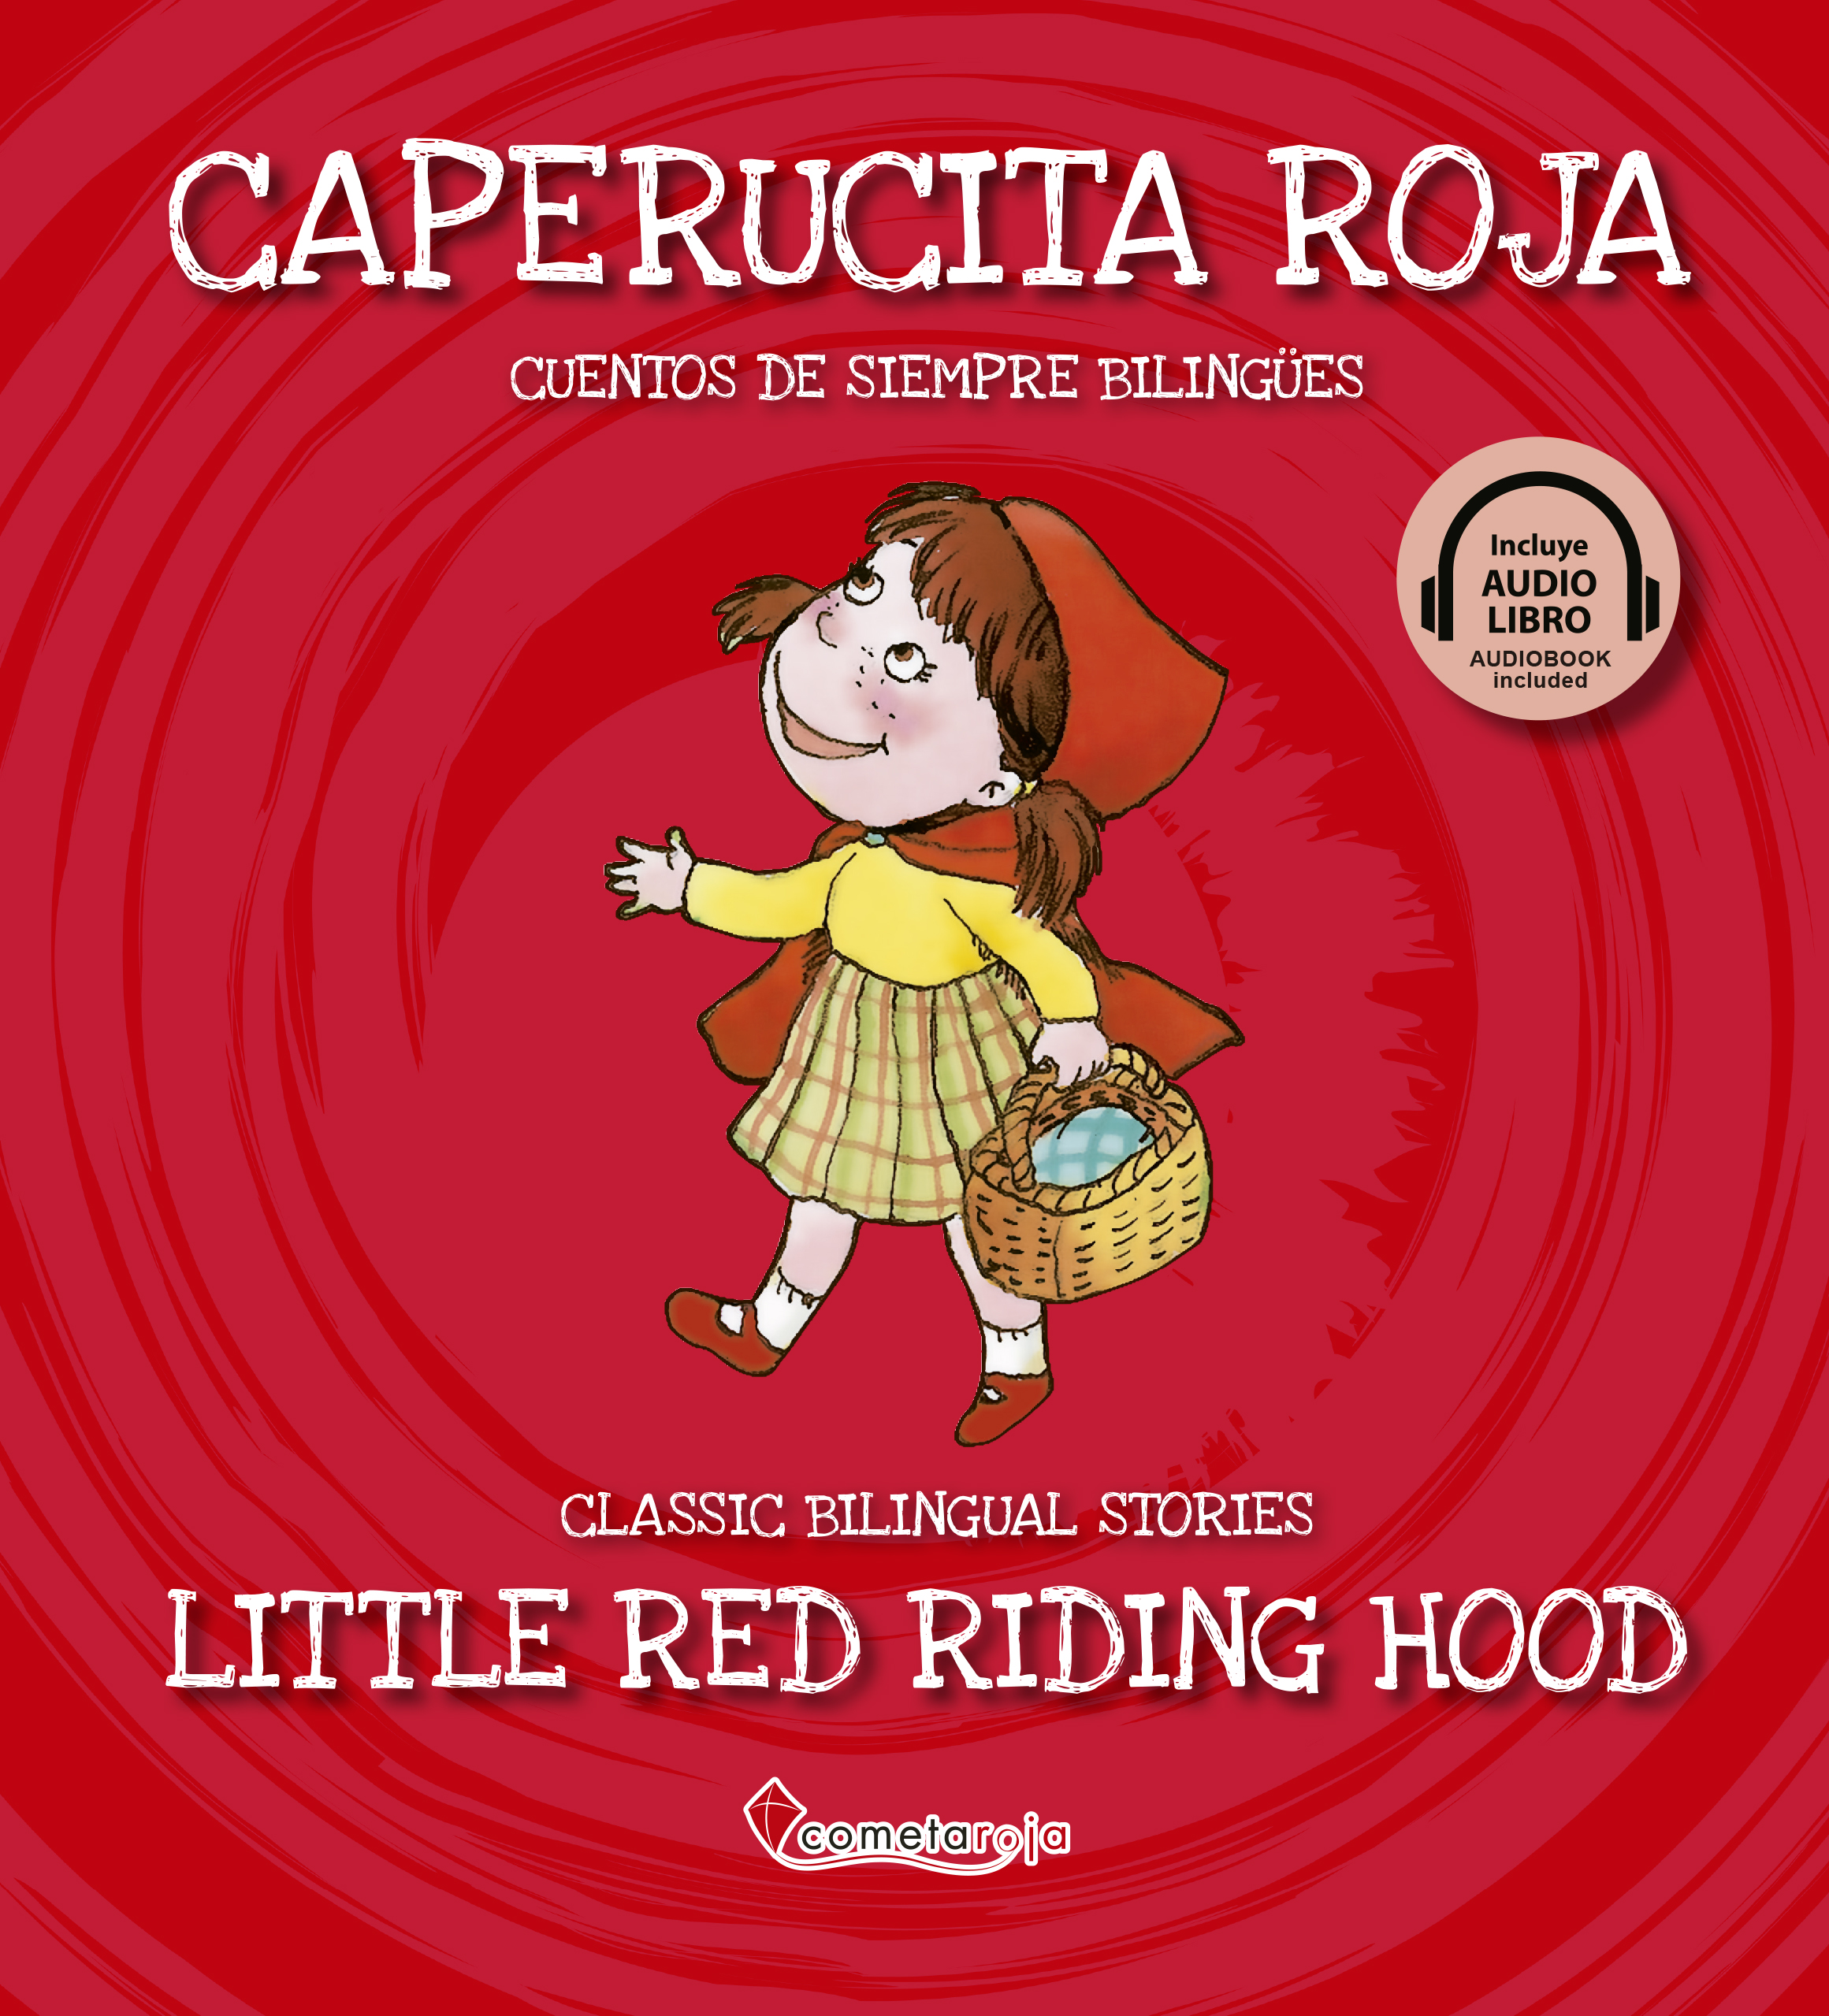 La caperucita roja / Little red riding hood